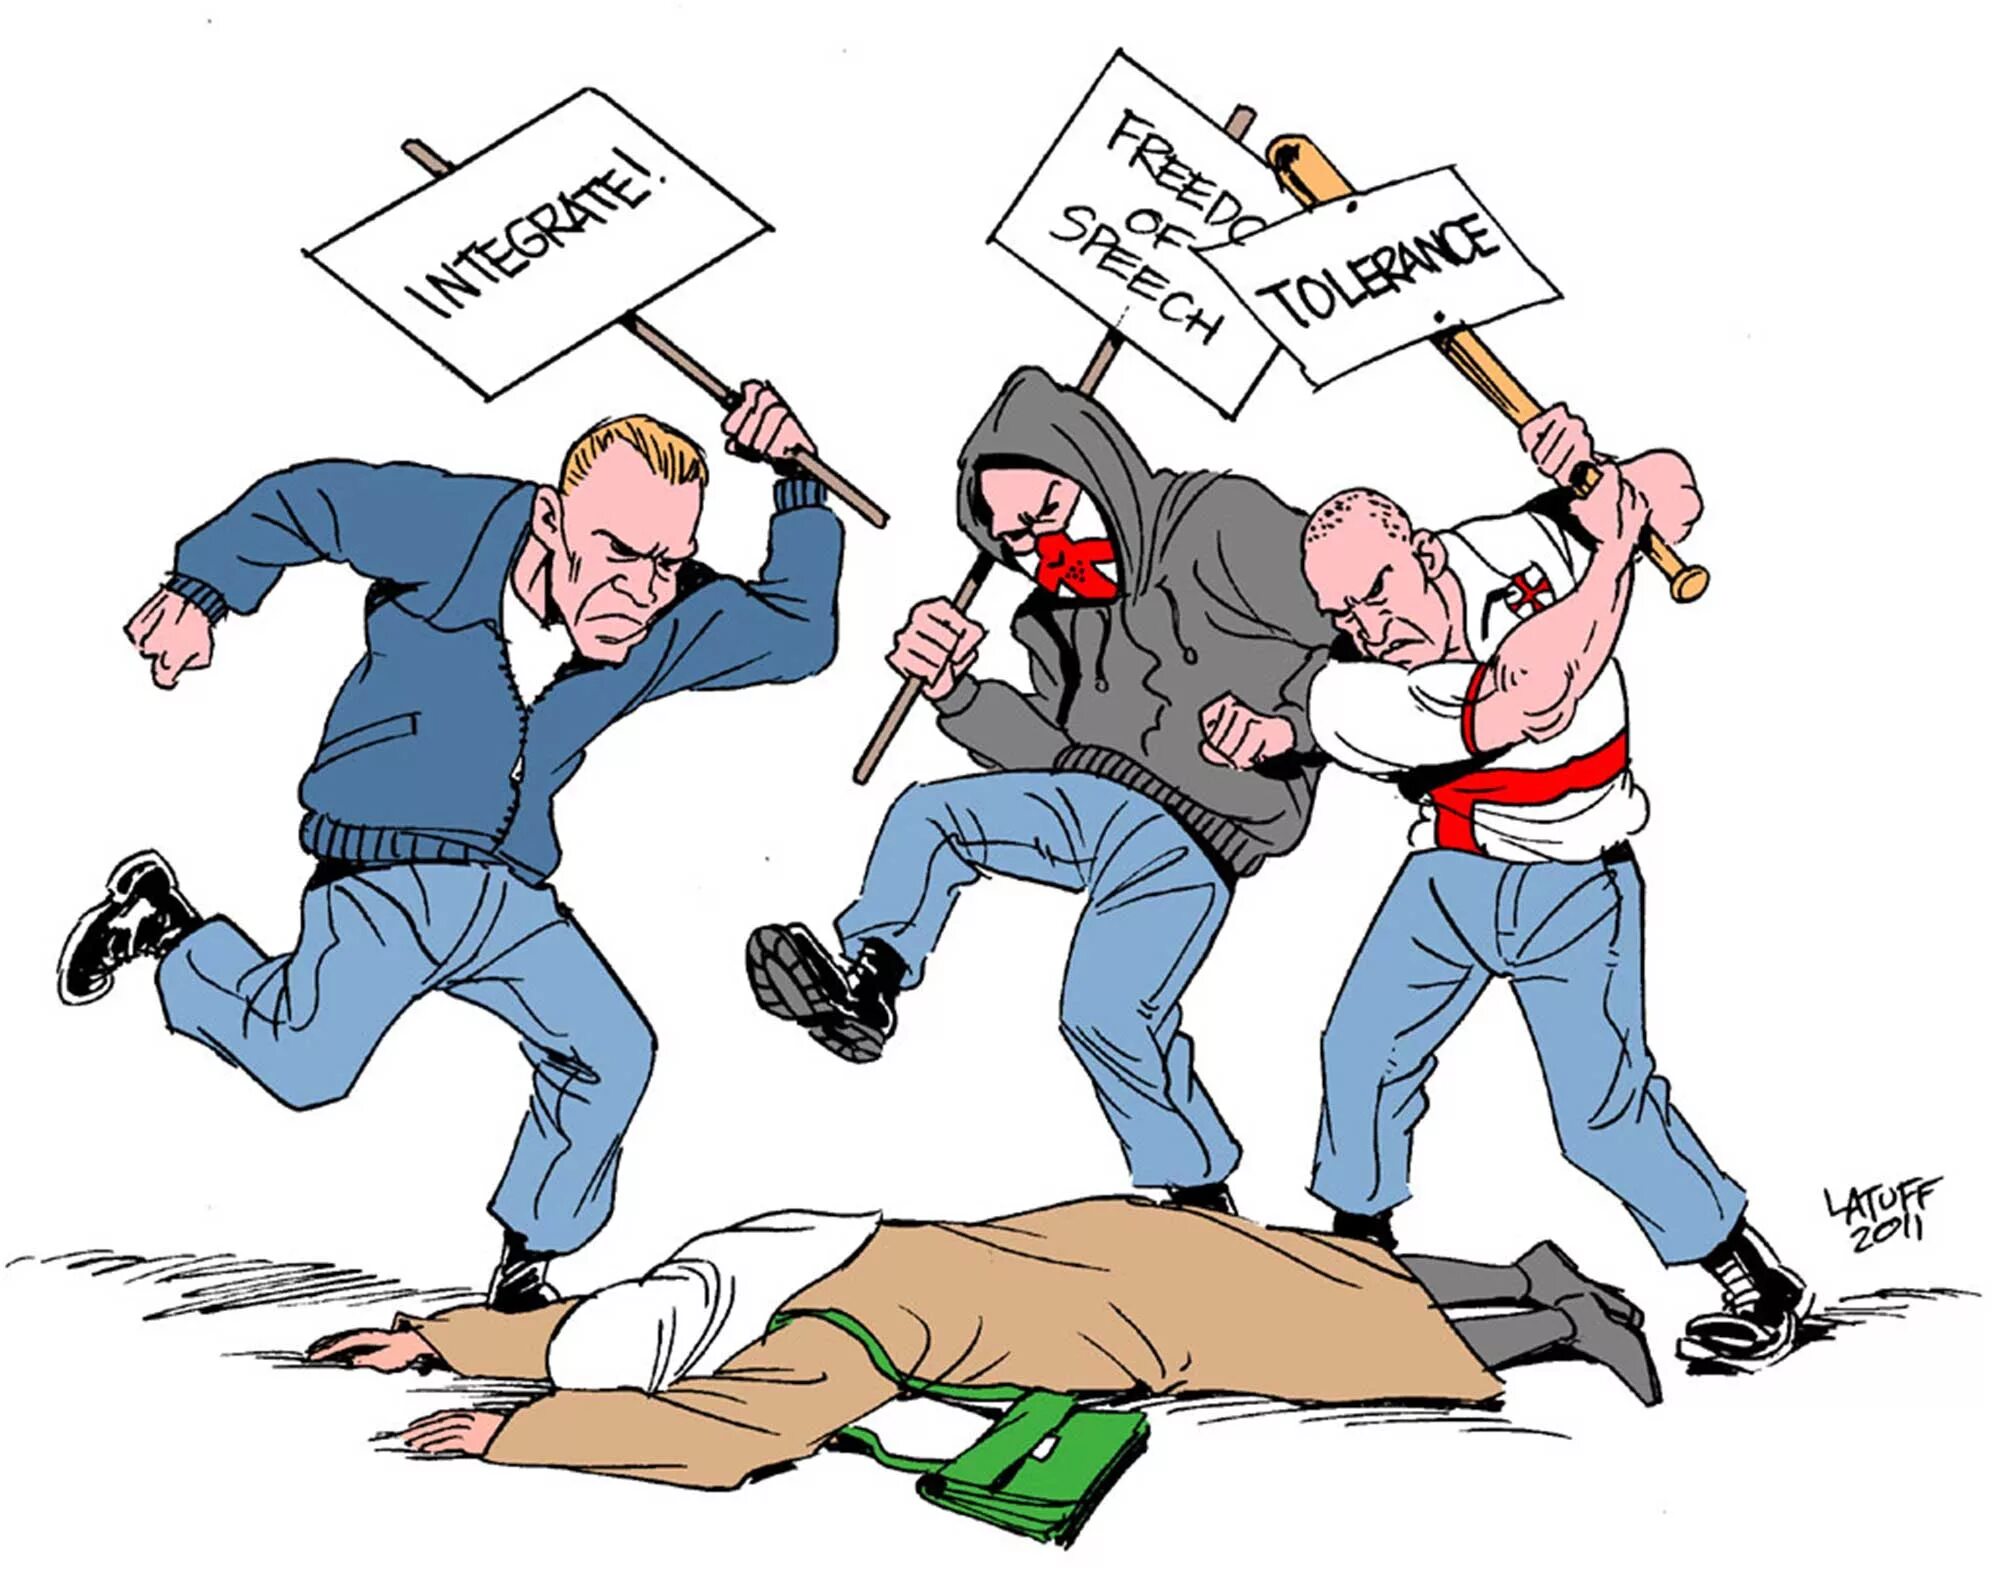 Конфликт конфликту рознь. Религиозный конфликт карикатуры. Карикатура против Ислама. Дискриминация карикатура. Преступность карикатура.